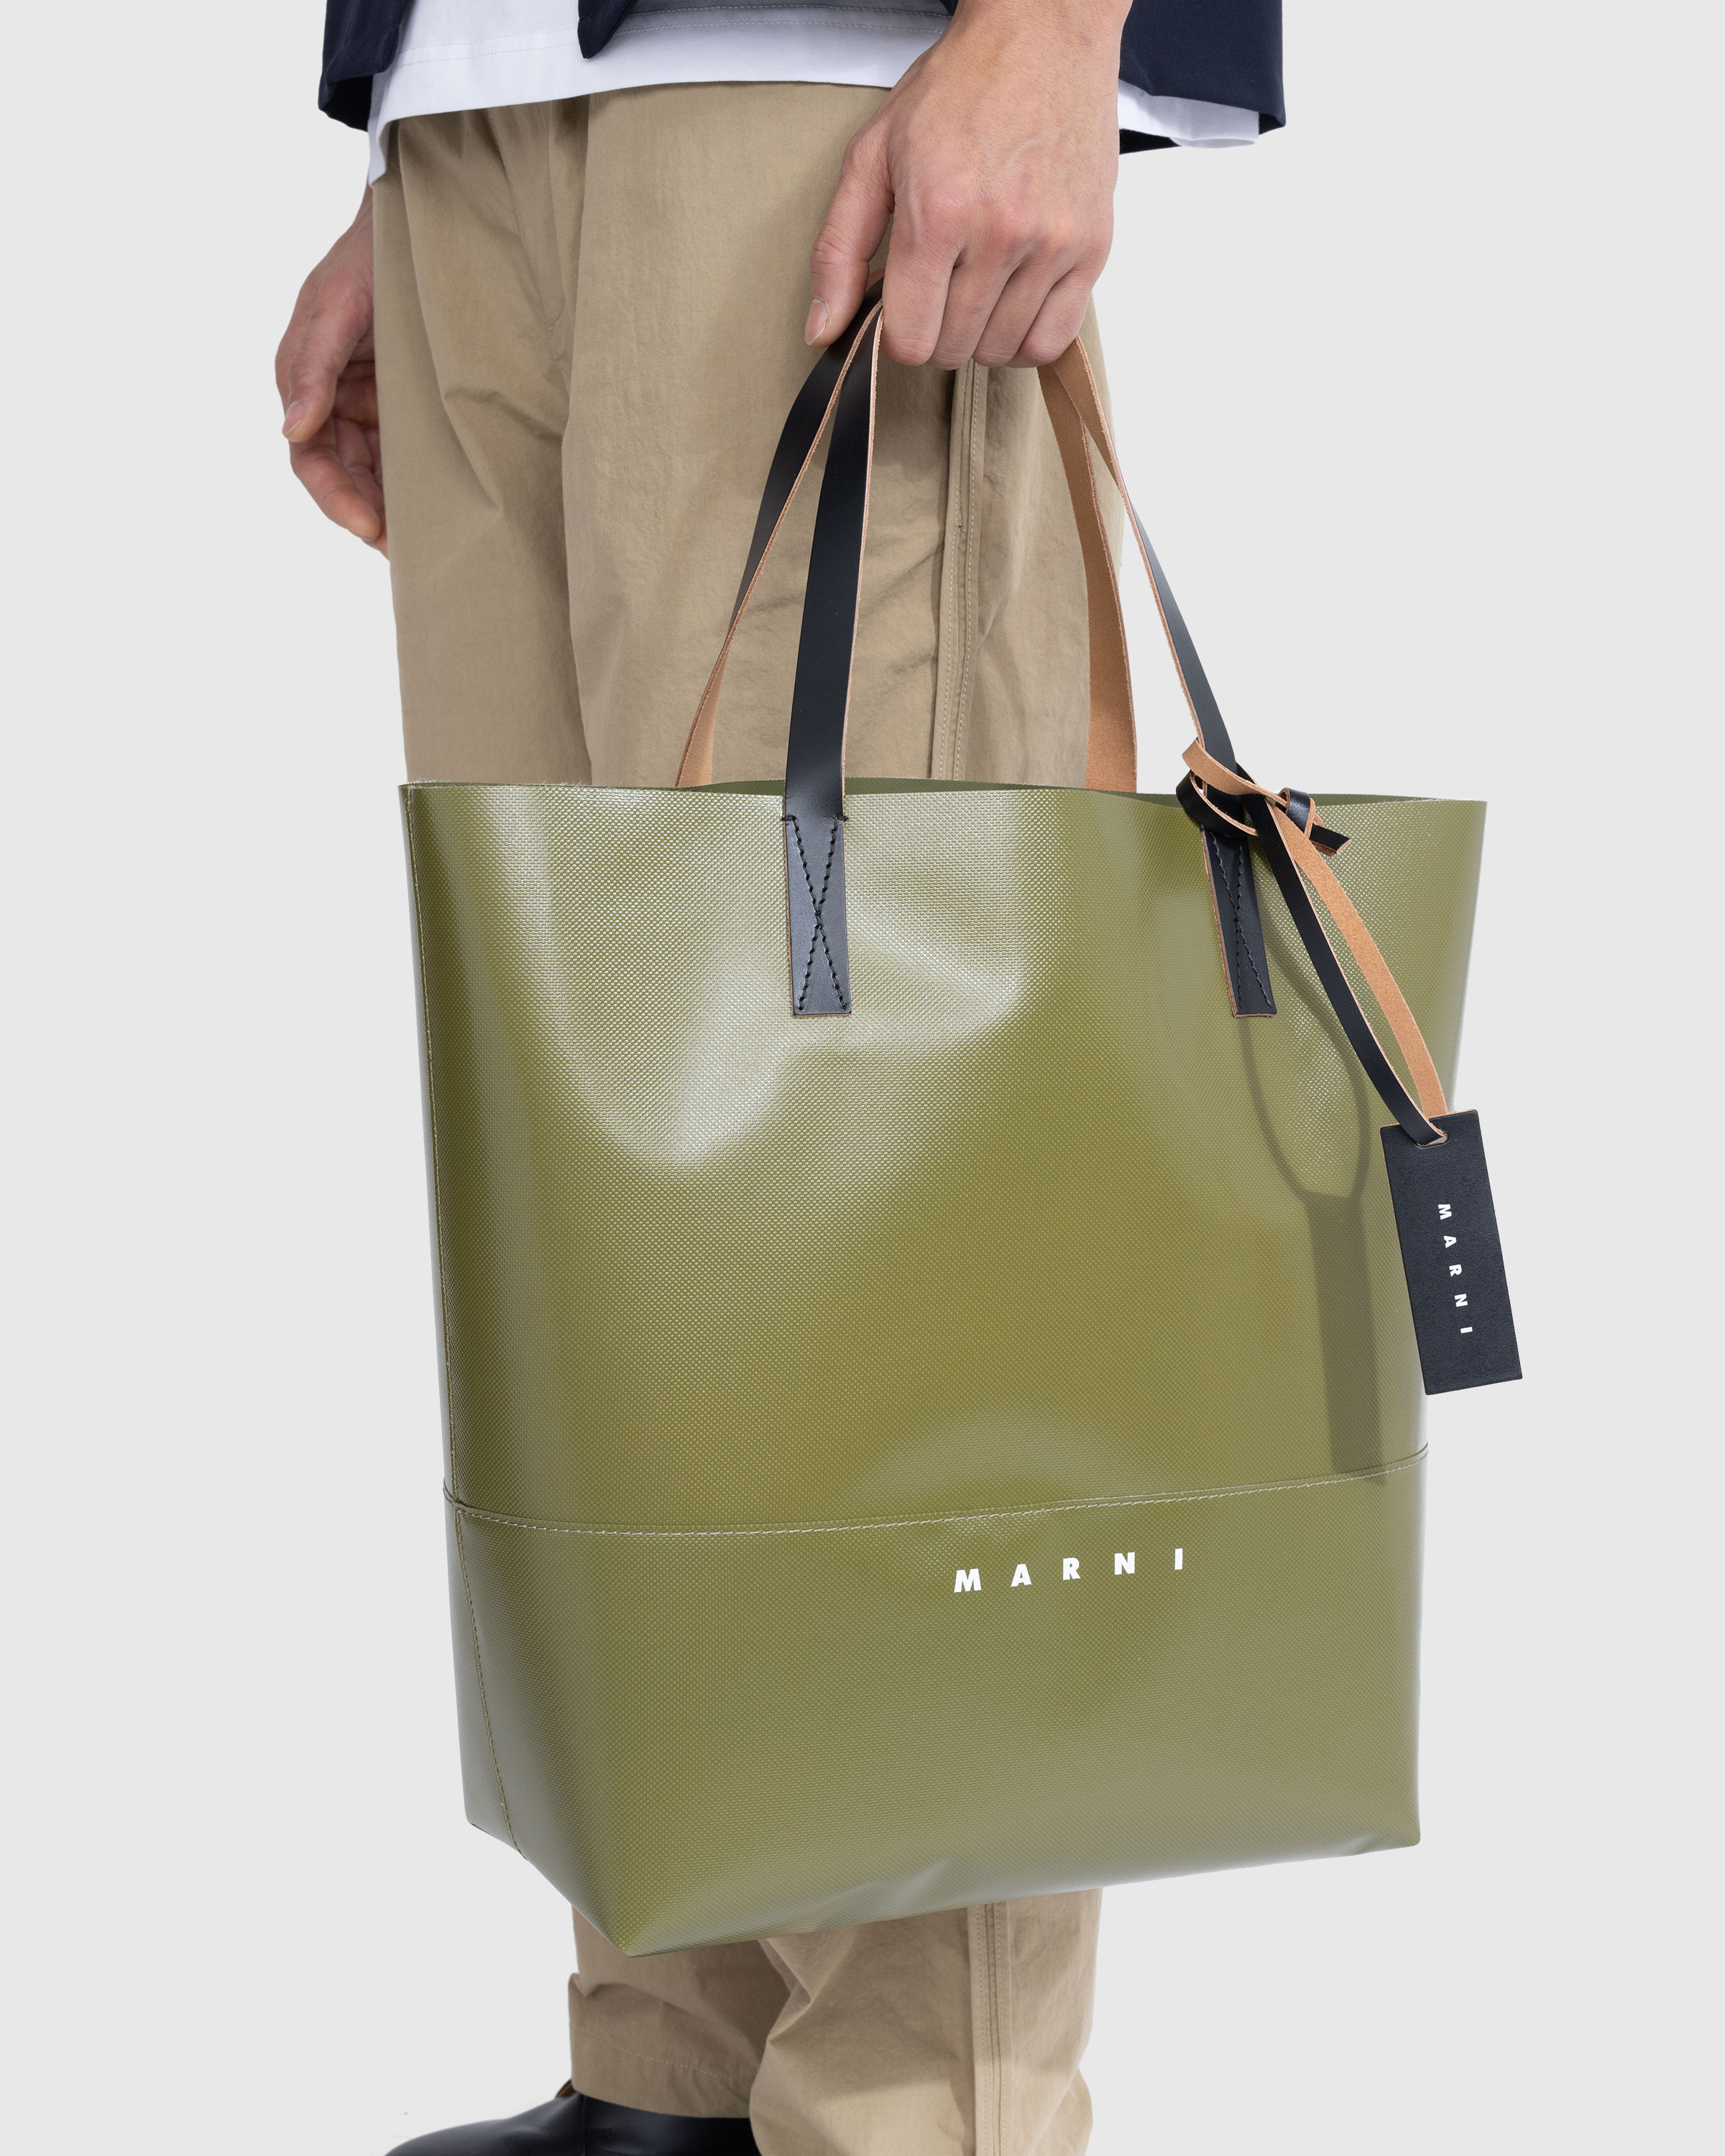 Marni - Tote Bag Olive Green - Accessories - Green - Image 4